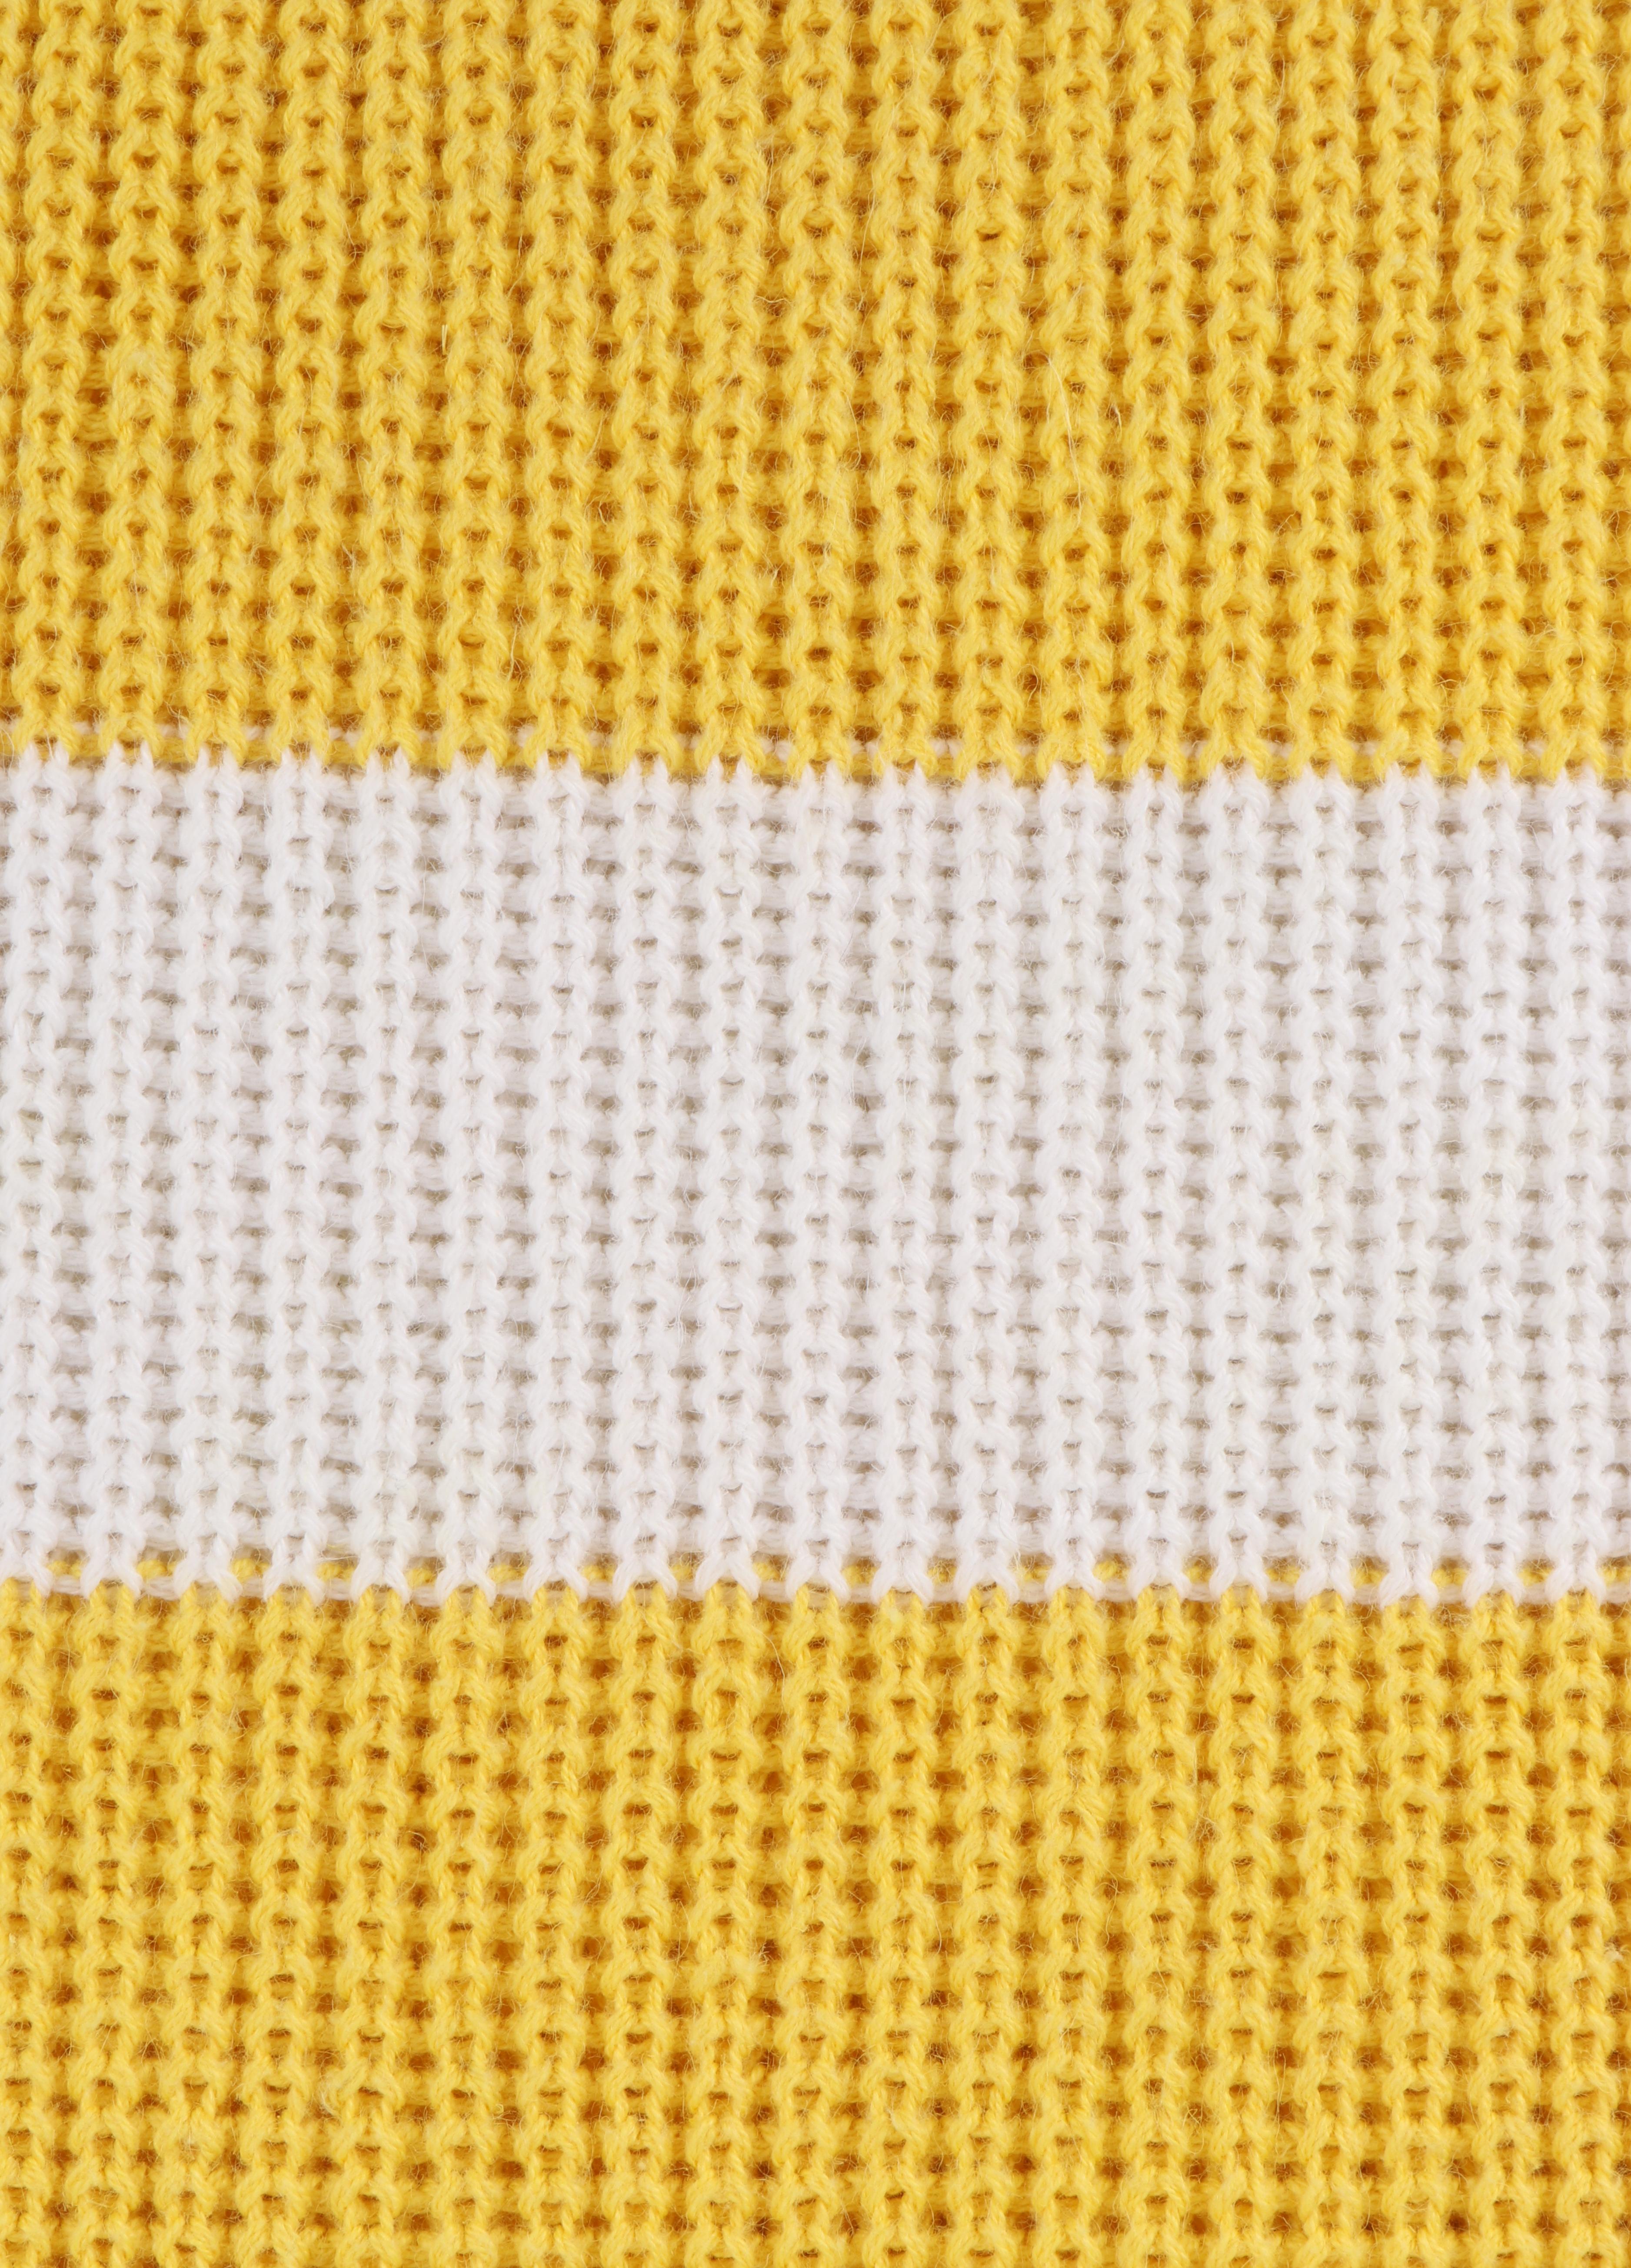 Women's DIANE VON FURSTENBERG c.1980s Yellow White Striped Knit Sleeveless Sweater Top For Sale